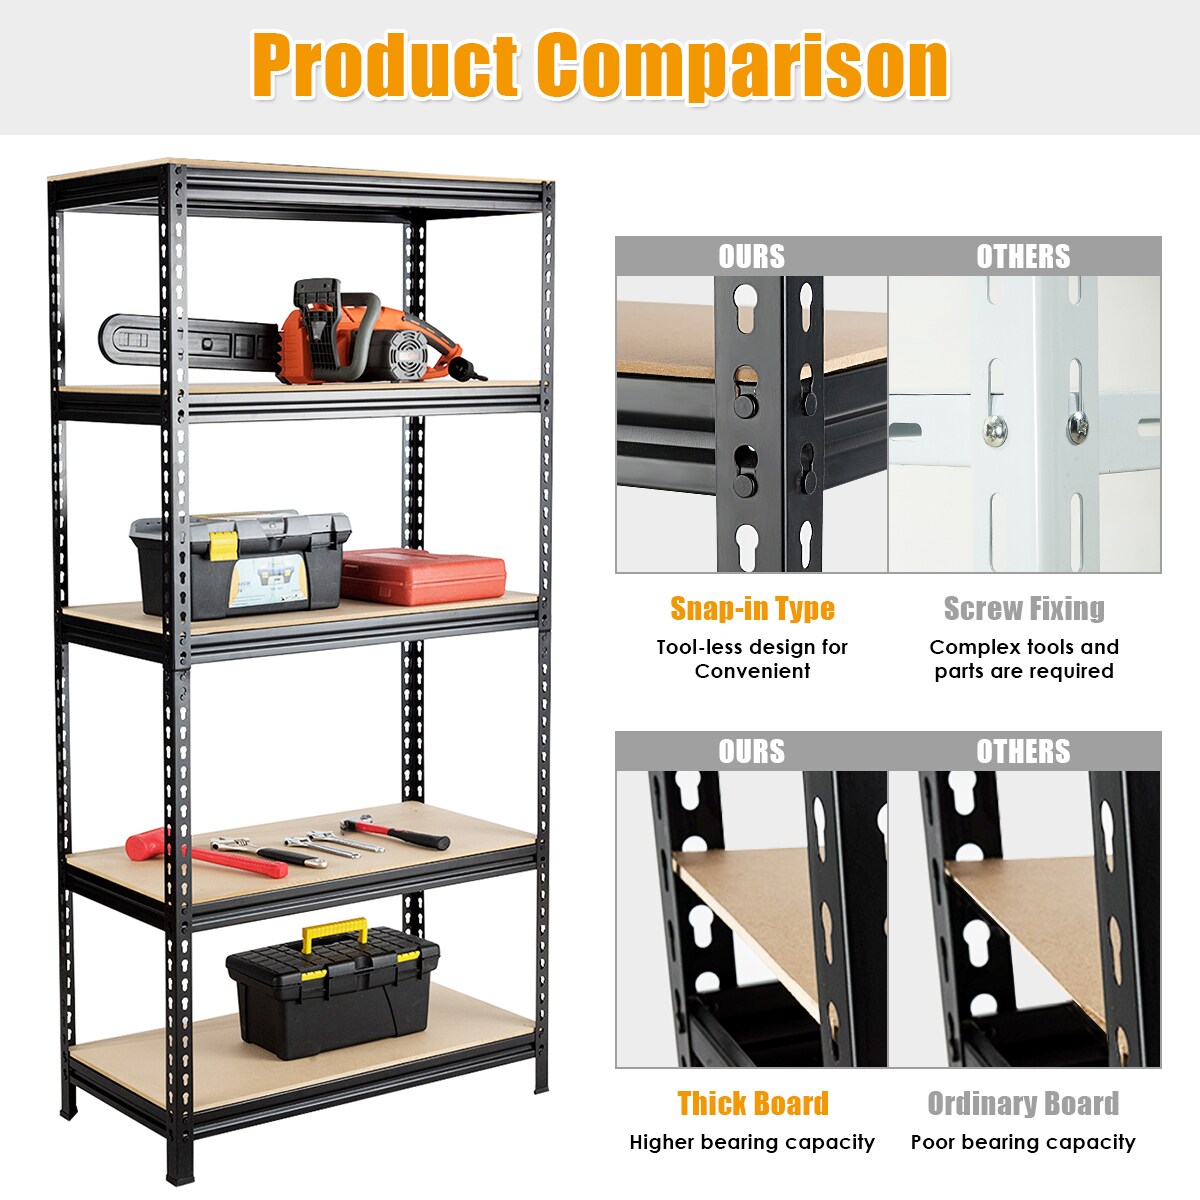 Goplus 5-Tier Metal Storage Shelves 73 inch Garage Rack Adjustable at